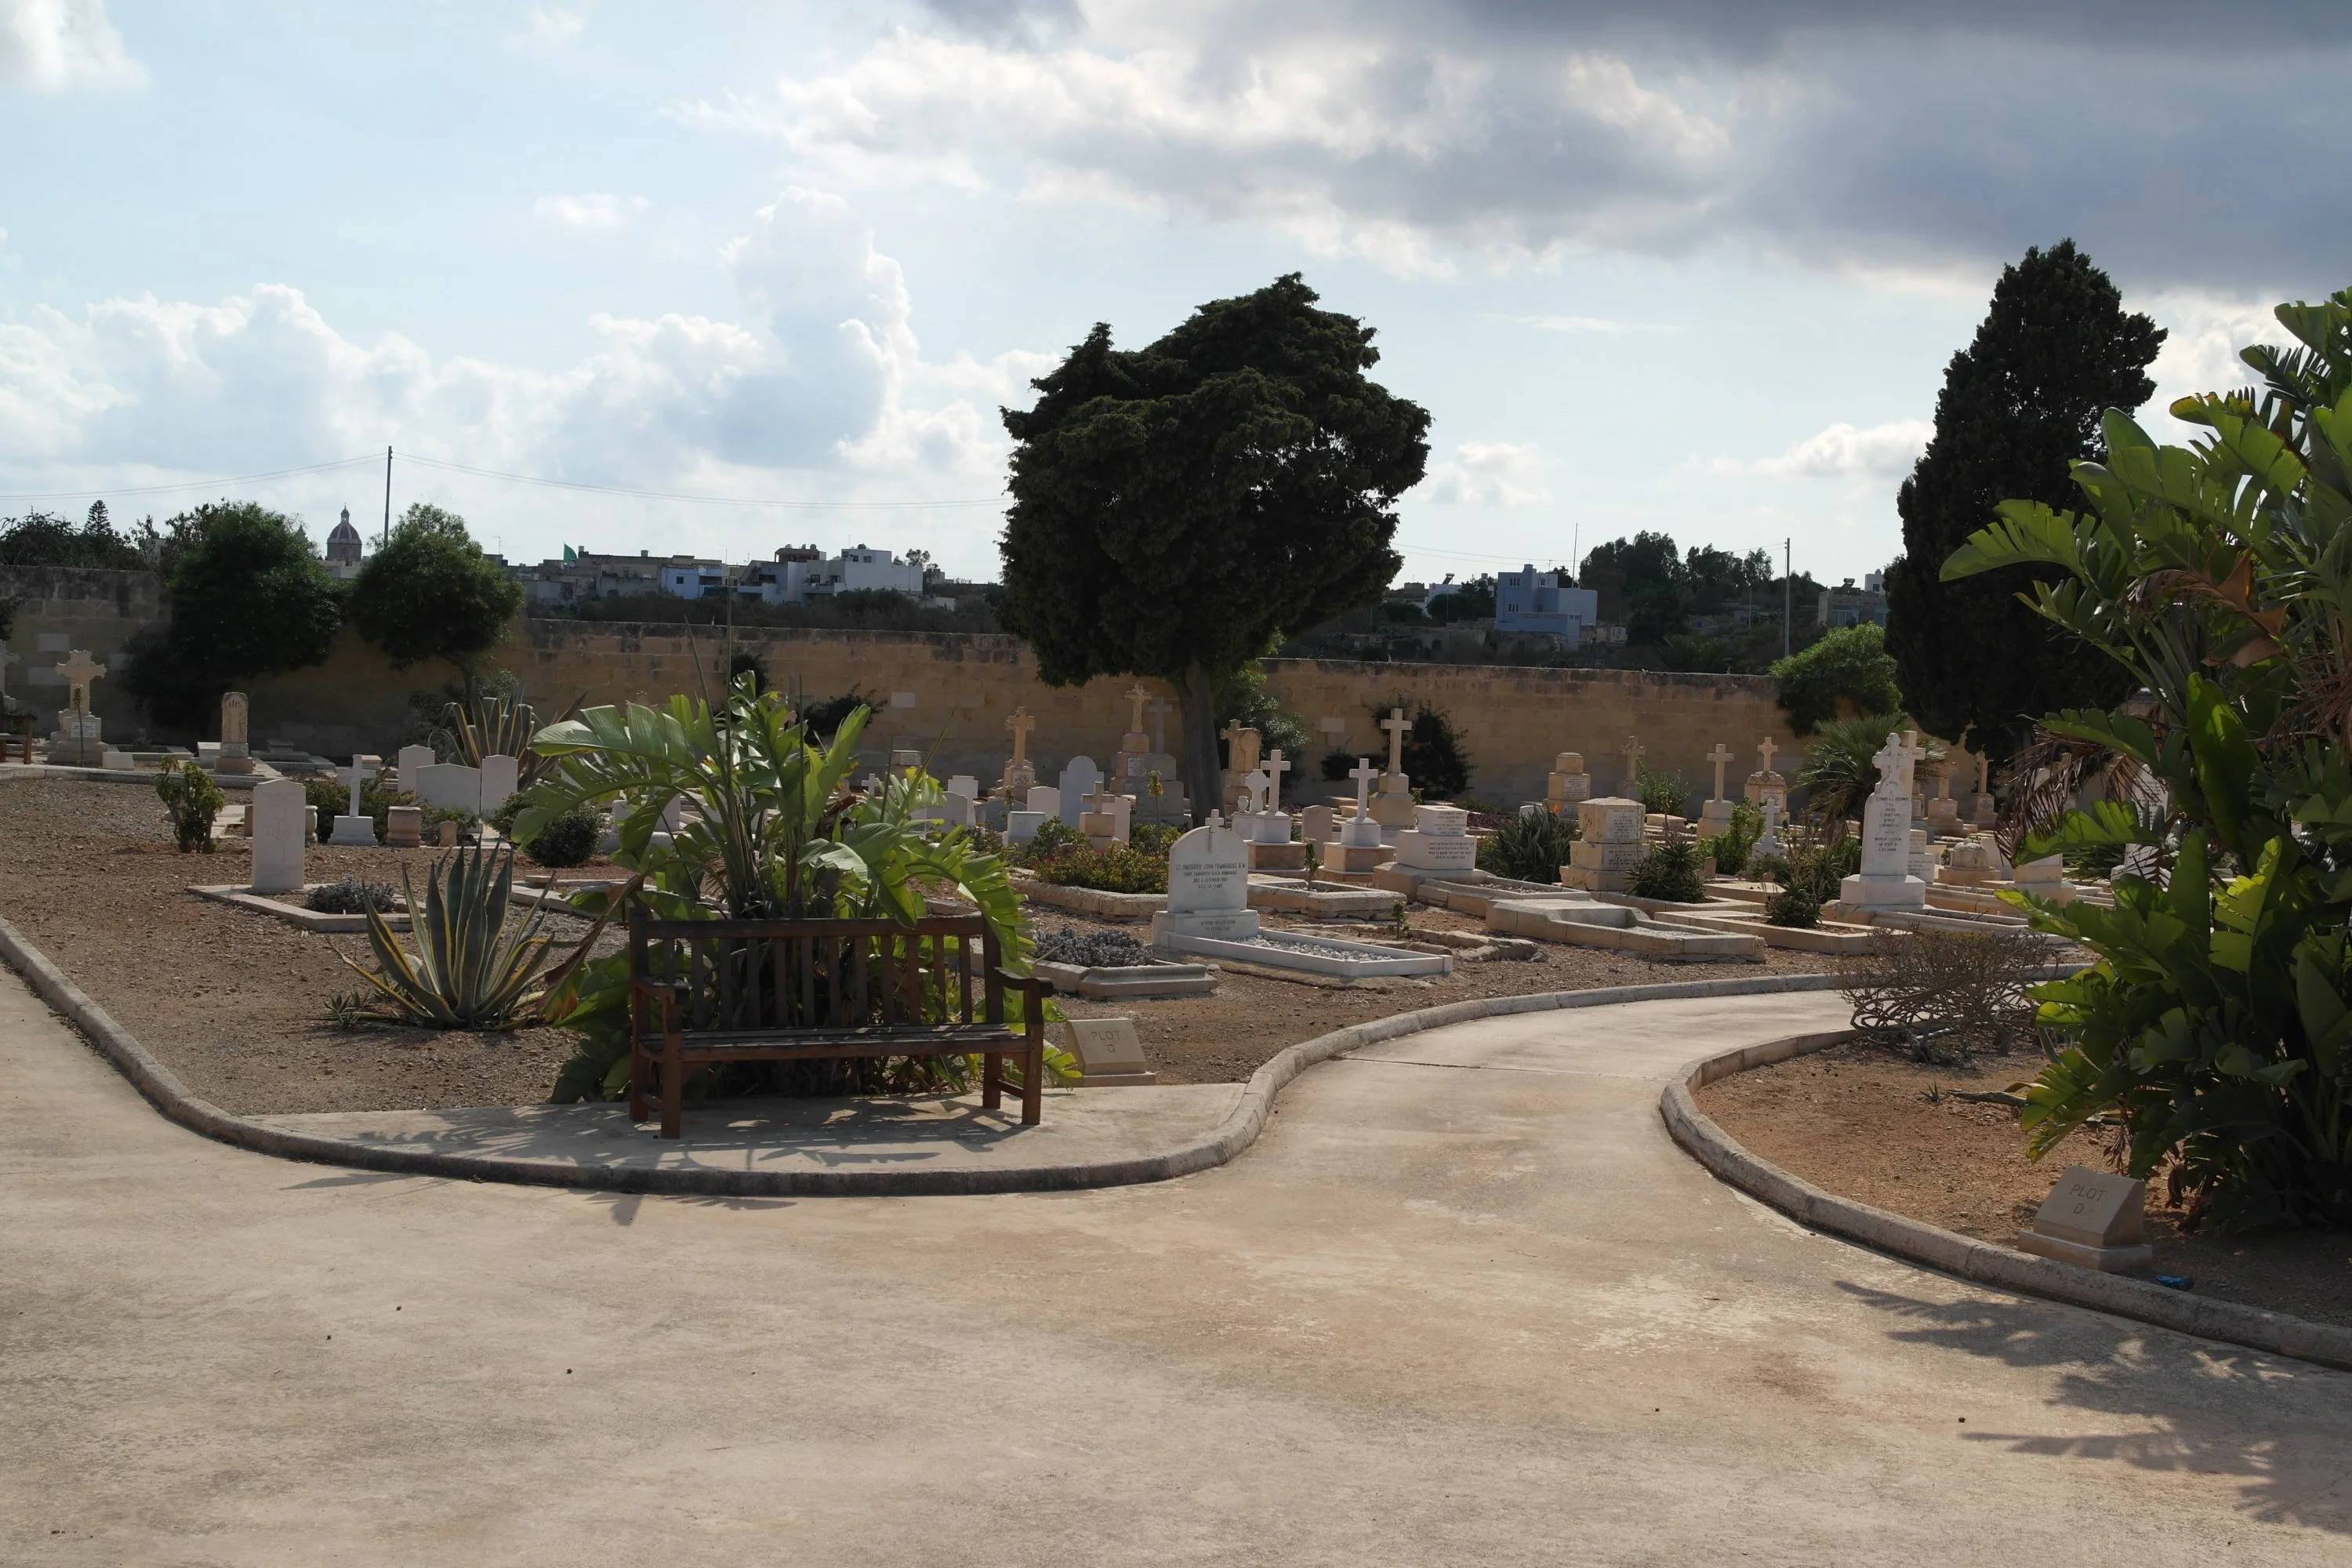 Kalkara Naval Cemetery, Malta. View